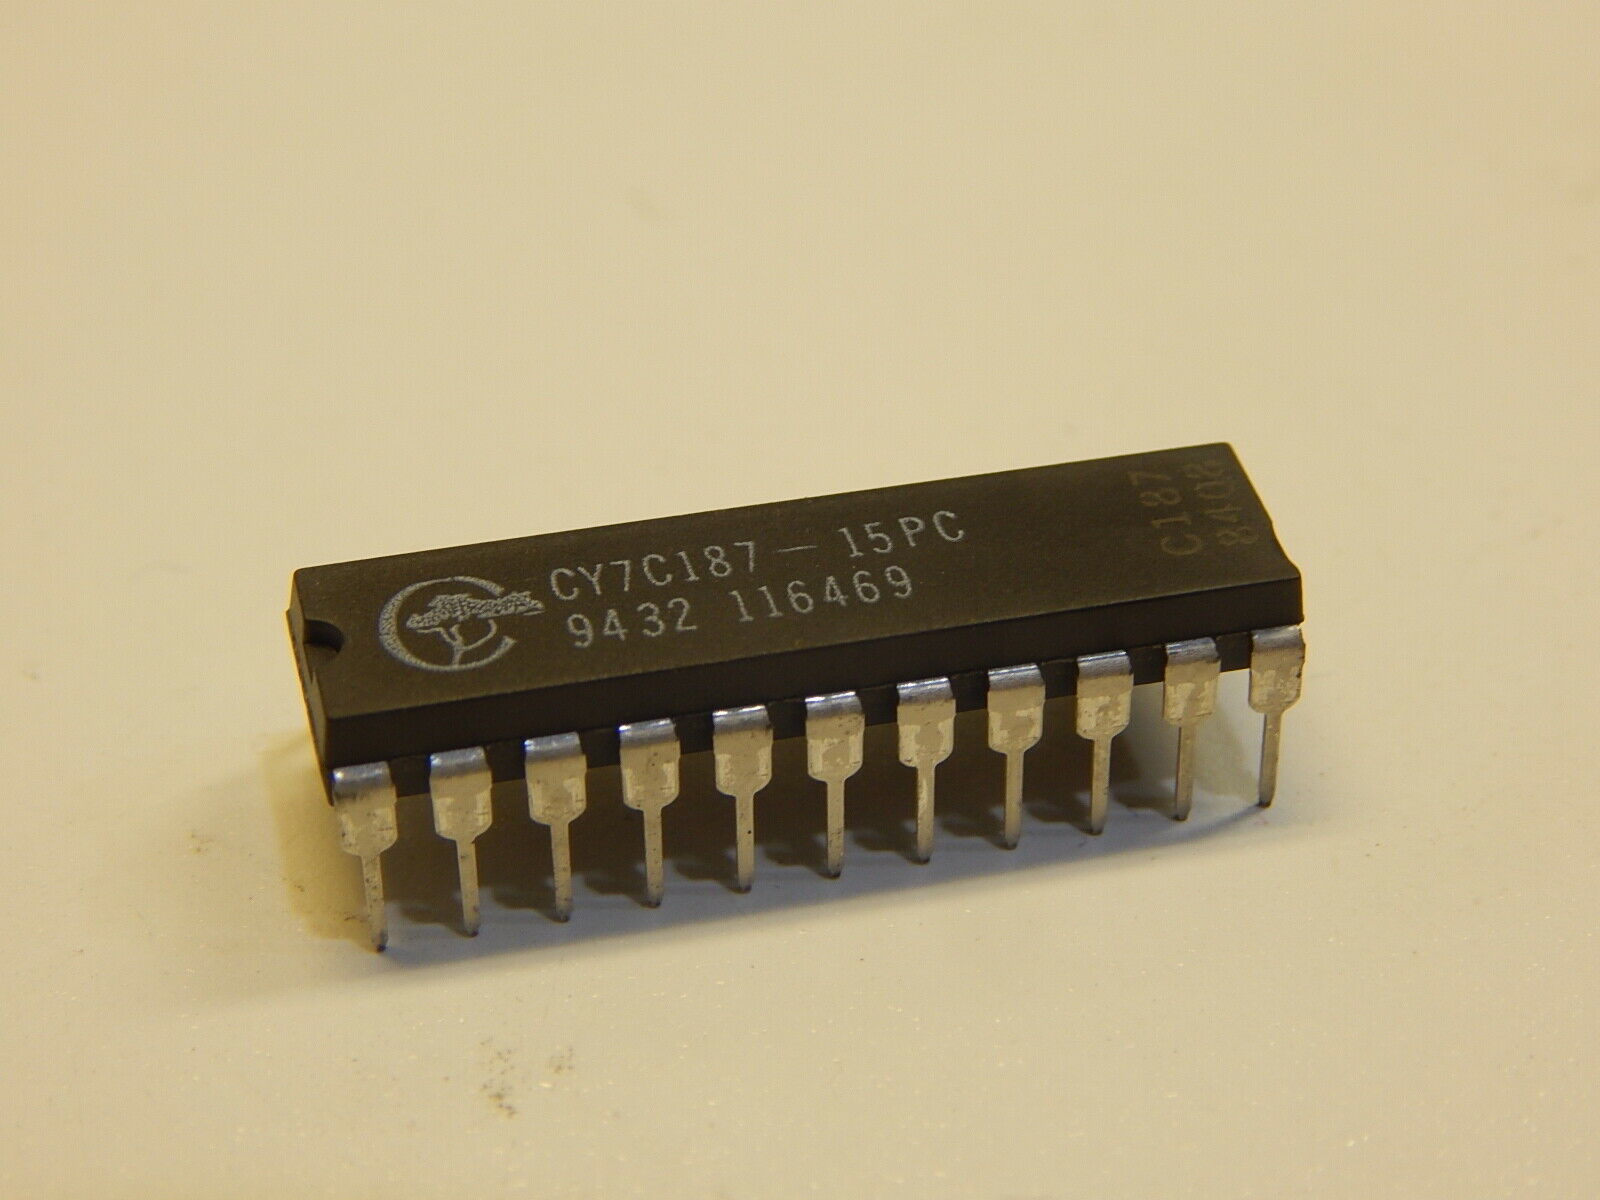 CYPRESS CY7C187-15PC Static RAM, 64Kx1, 22 Pin, Plastic, DIP